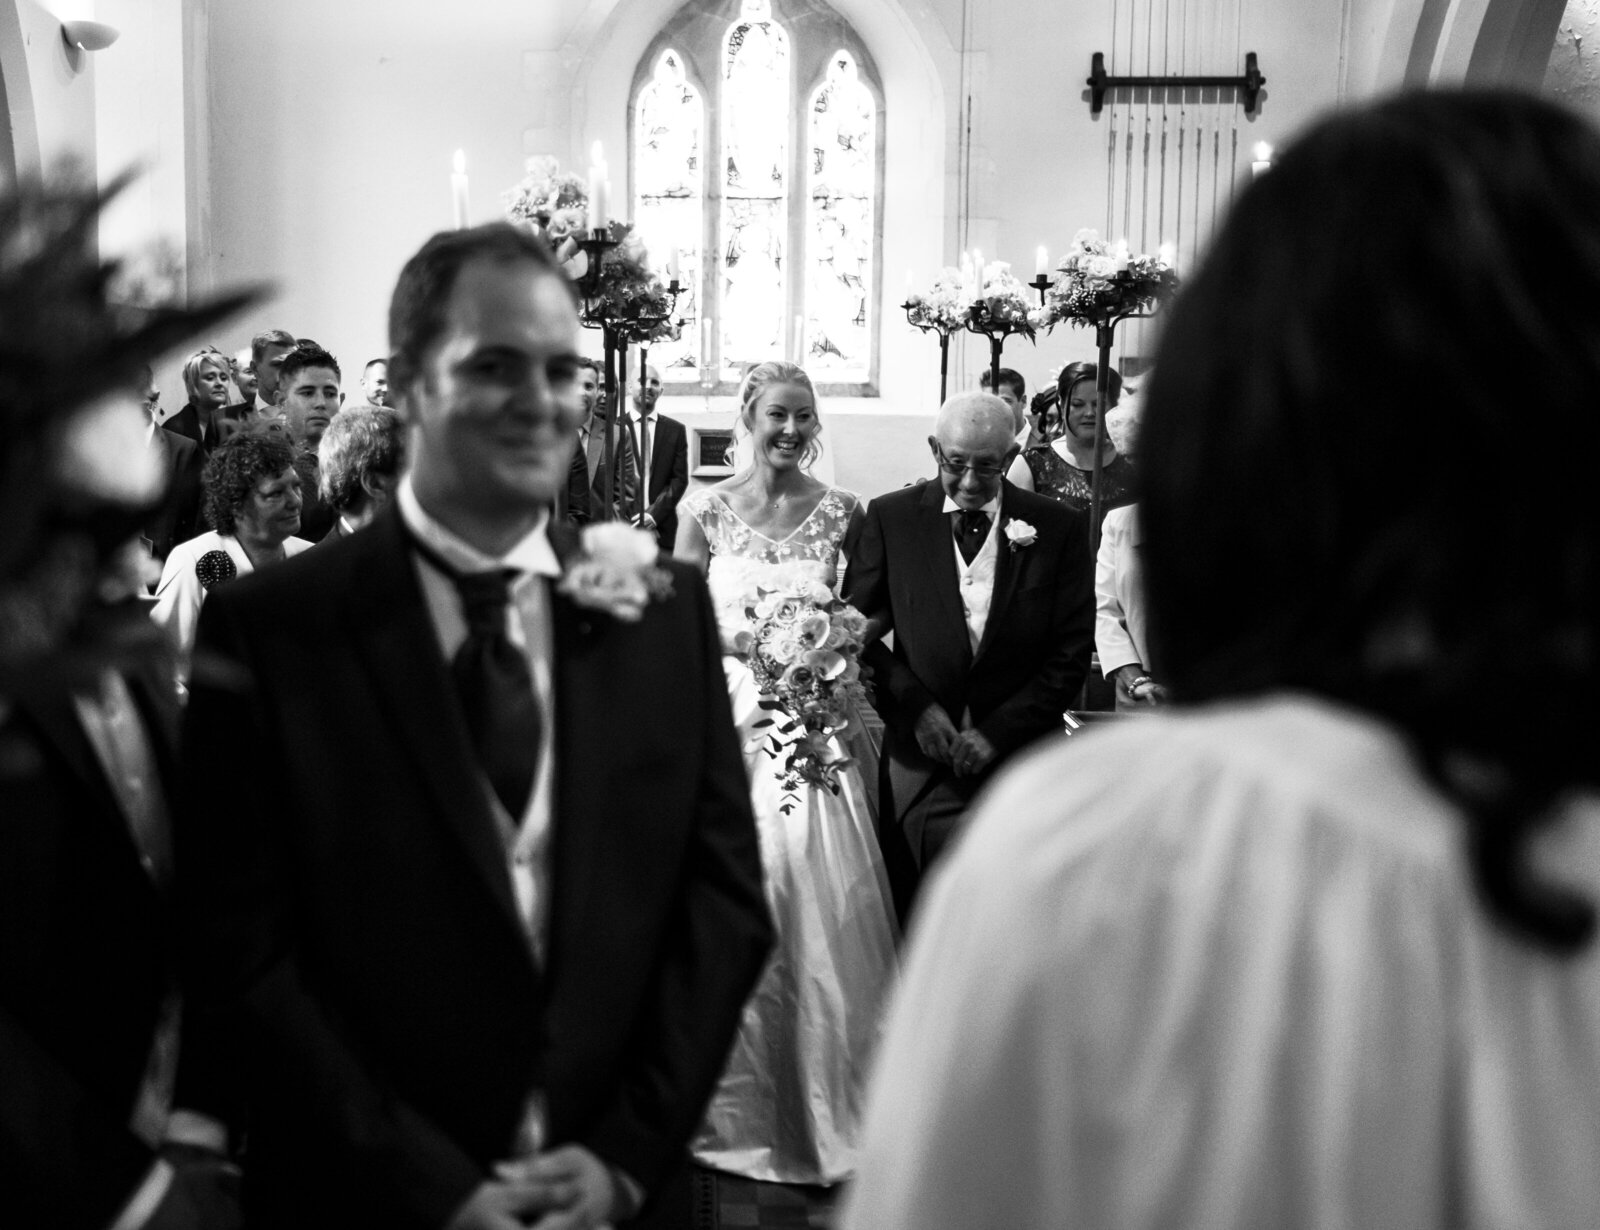 Sian walking down the aisle at her Berkshire wedding